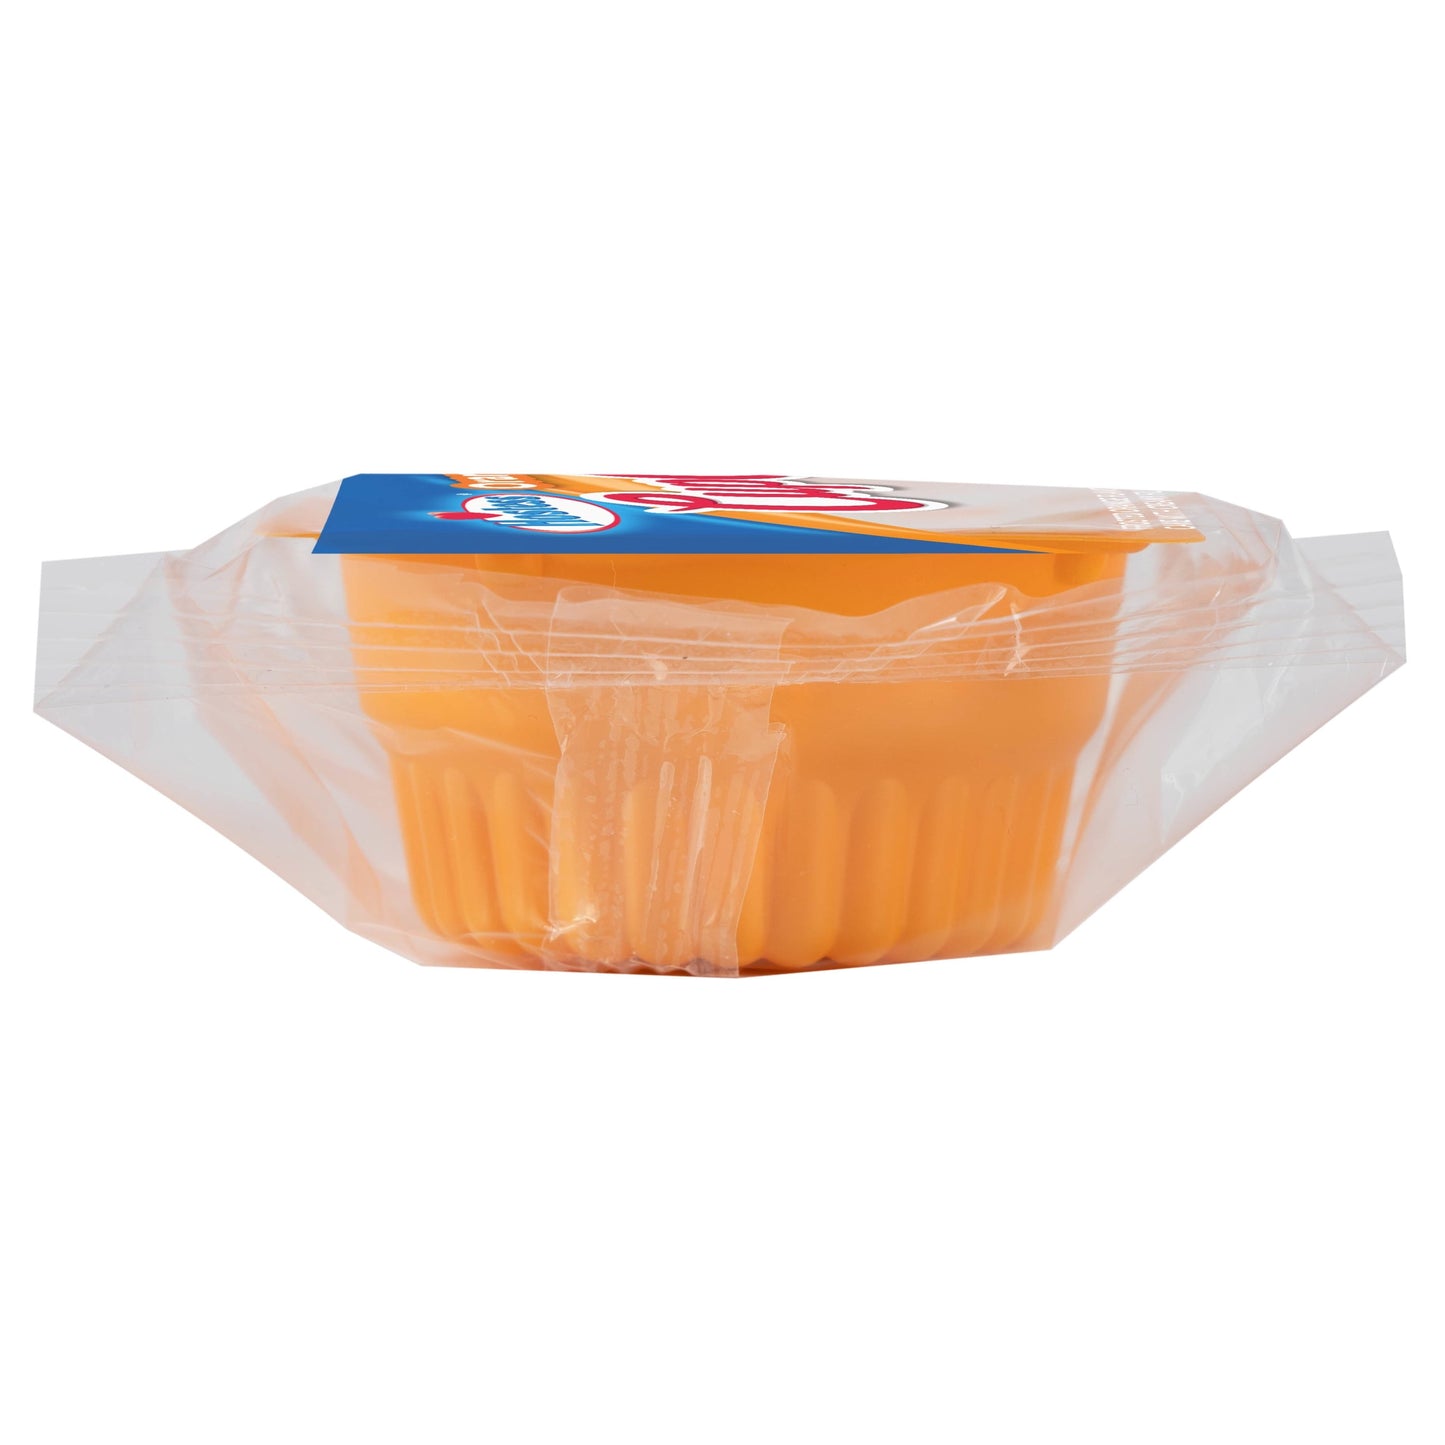 Hostess Orange Flavored Cupcakes, Single Serve, 2 Count, 3.38 oz